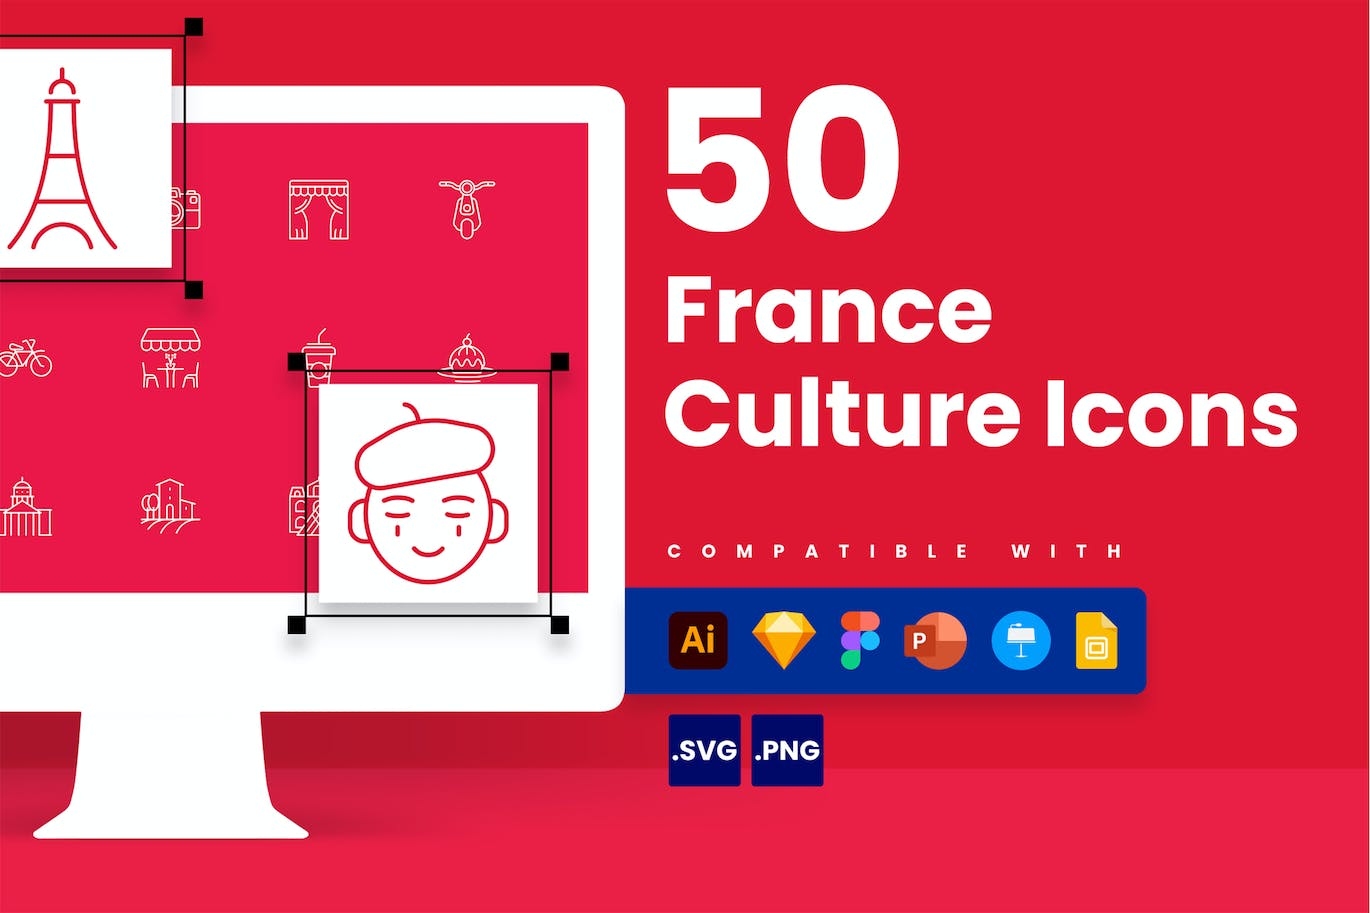 50法国元素矢量图标集 (AI,PNG,FIG,SKETCH,SVG)